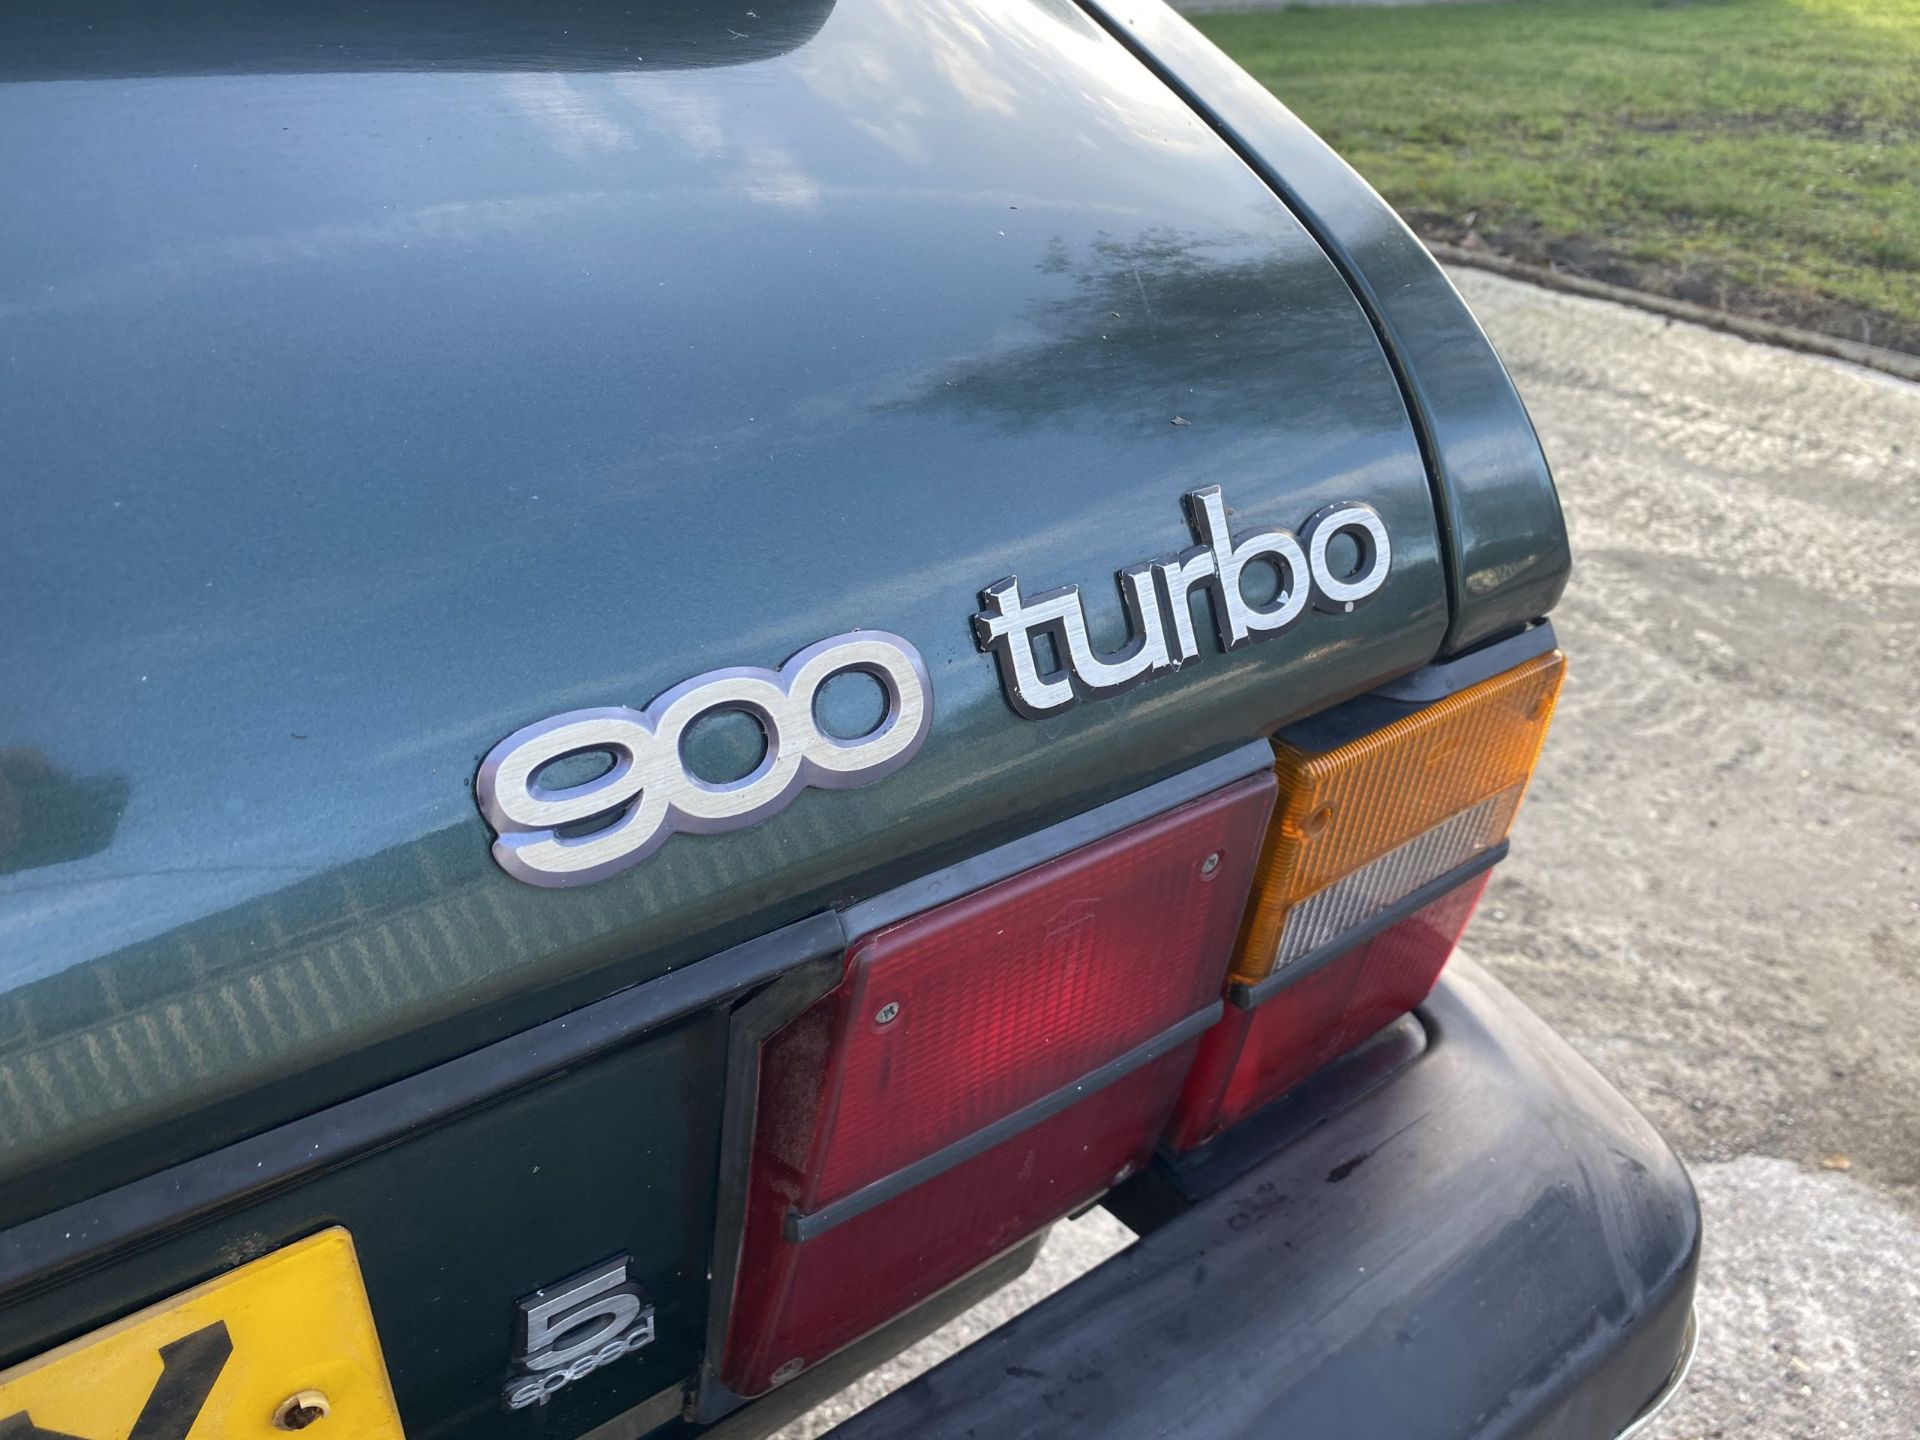 Saab 900 Turbo Combi Coupe - Image 3 of 53